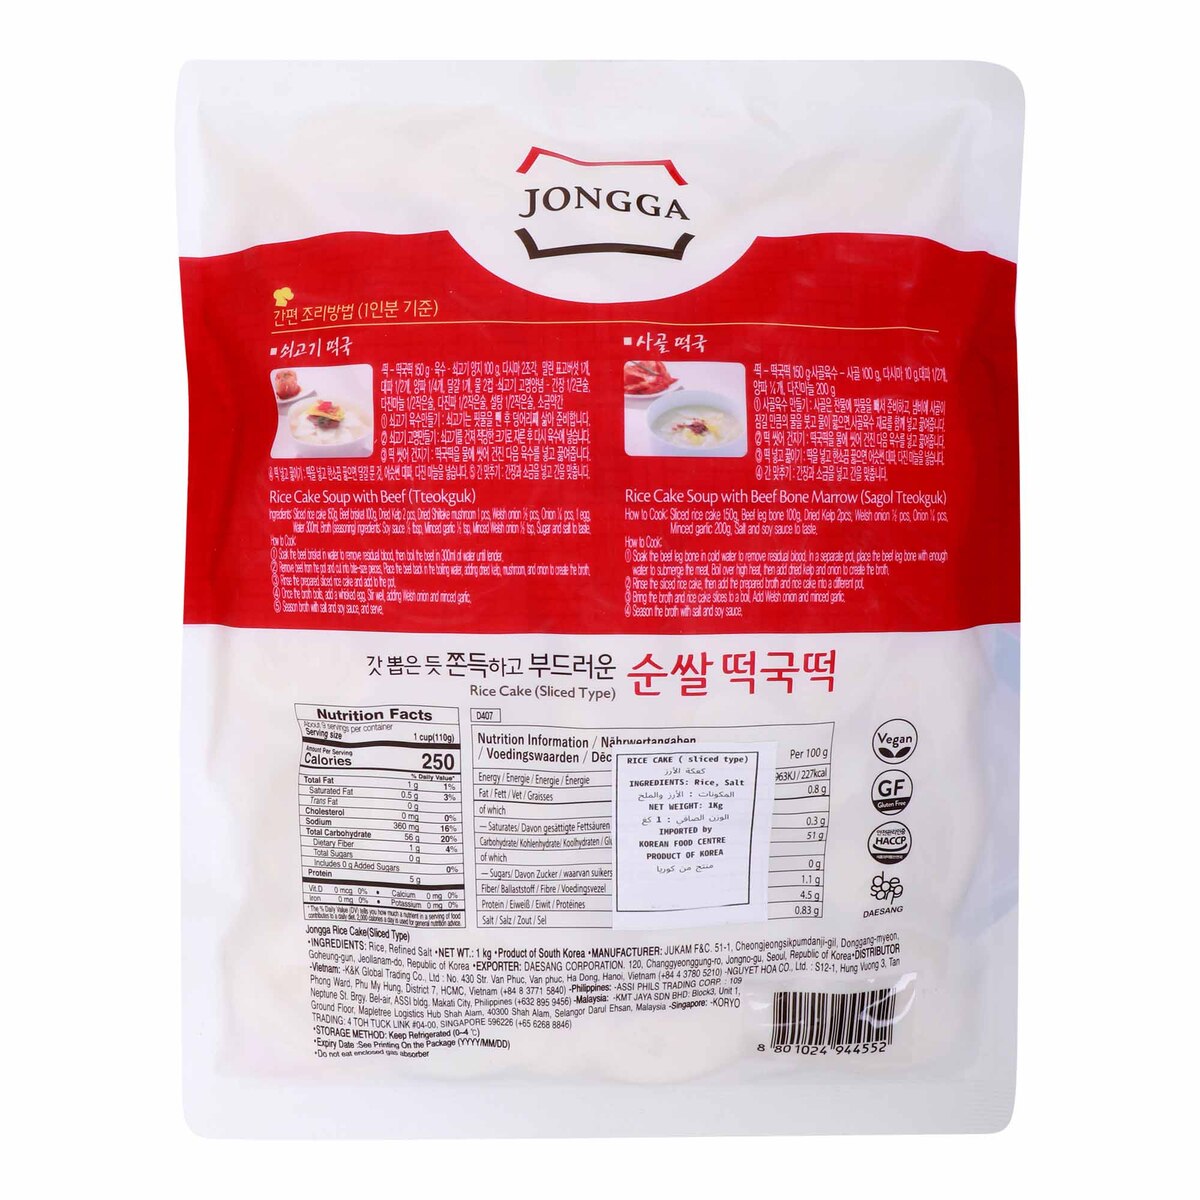 Jongga Sliced Type Rice Cake 1 kg